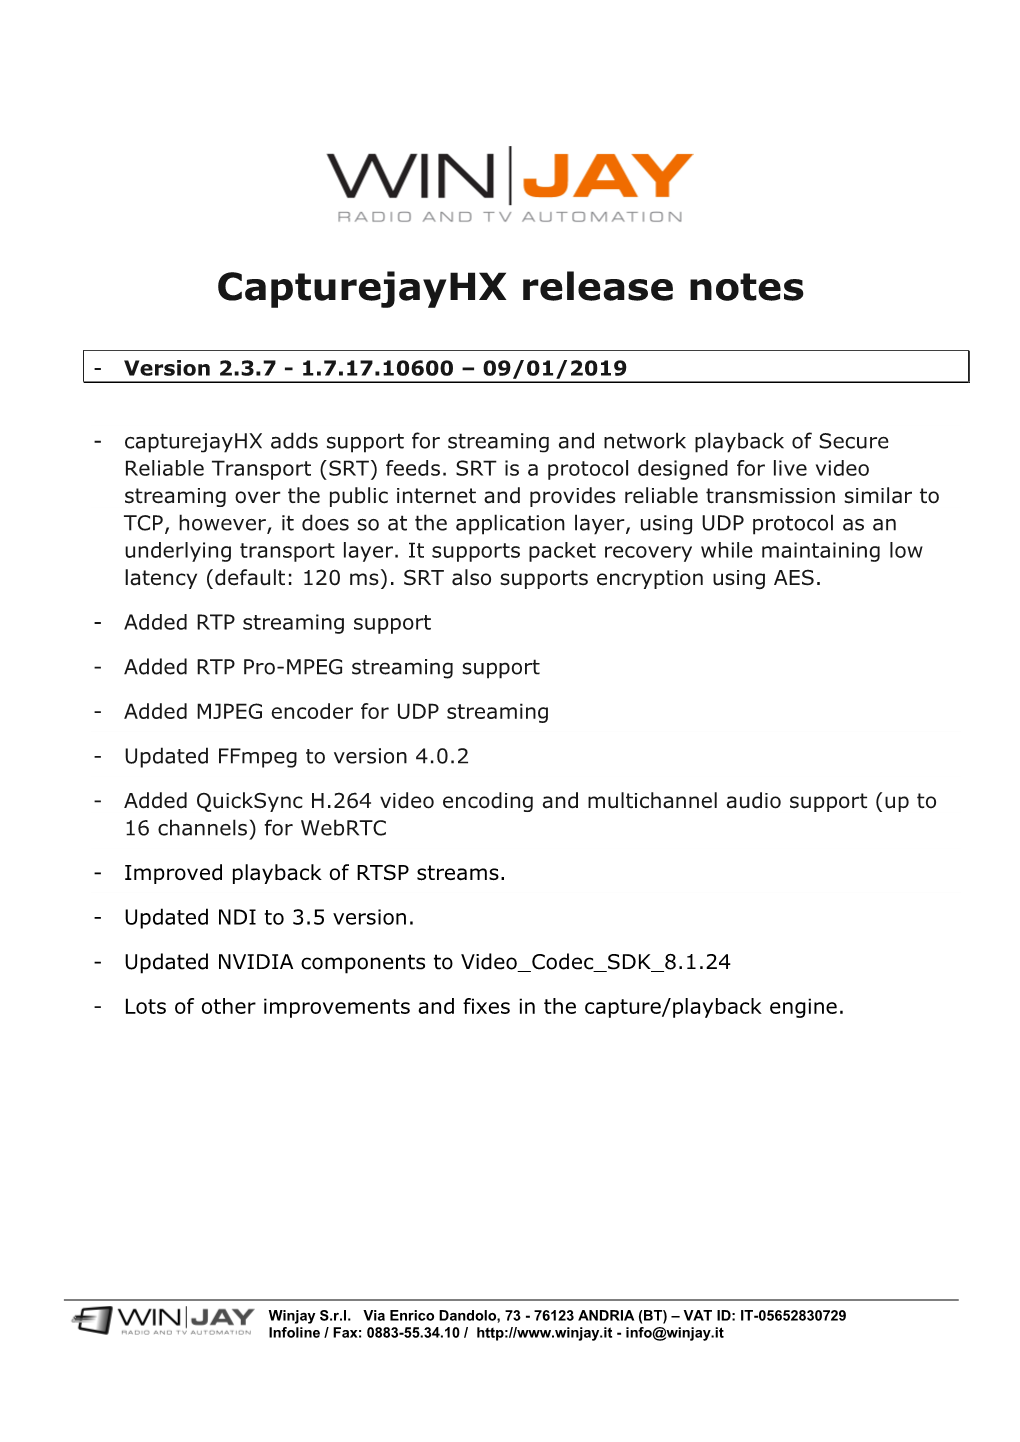 Capturejayhx Release Notes